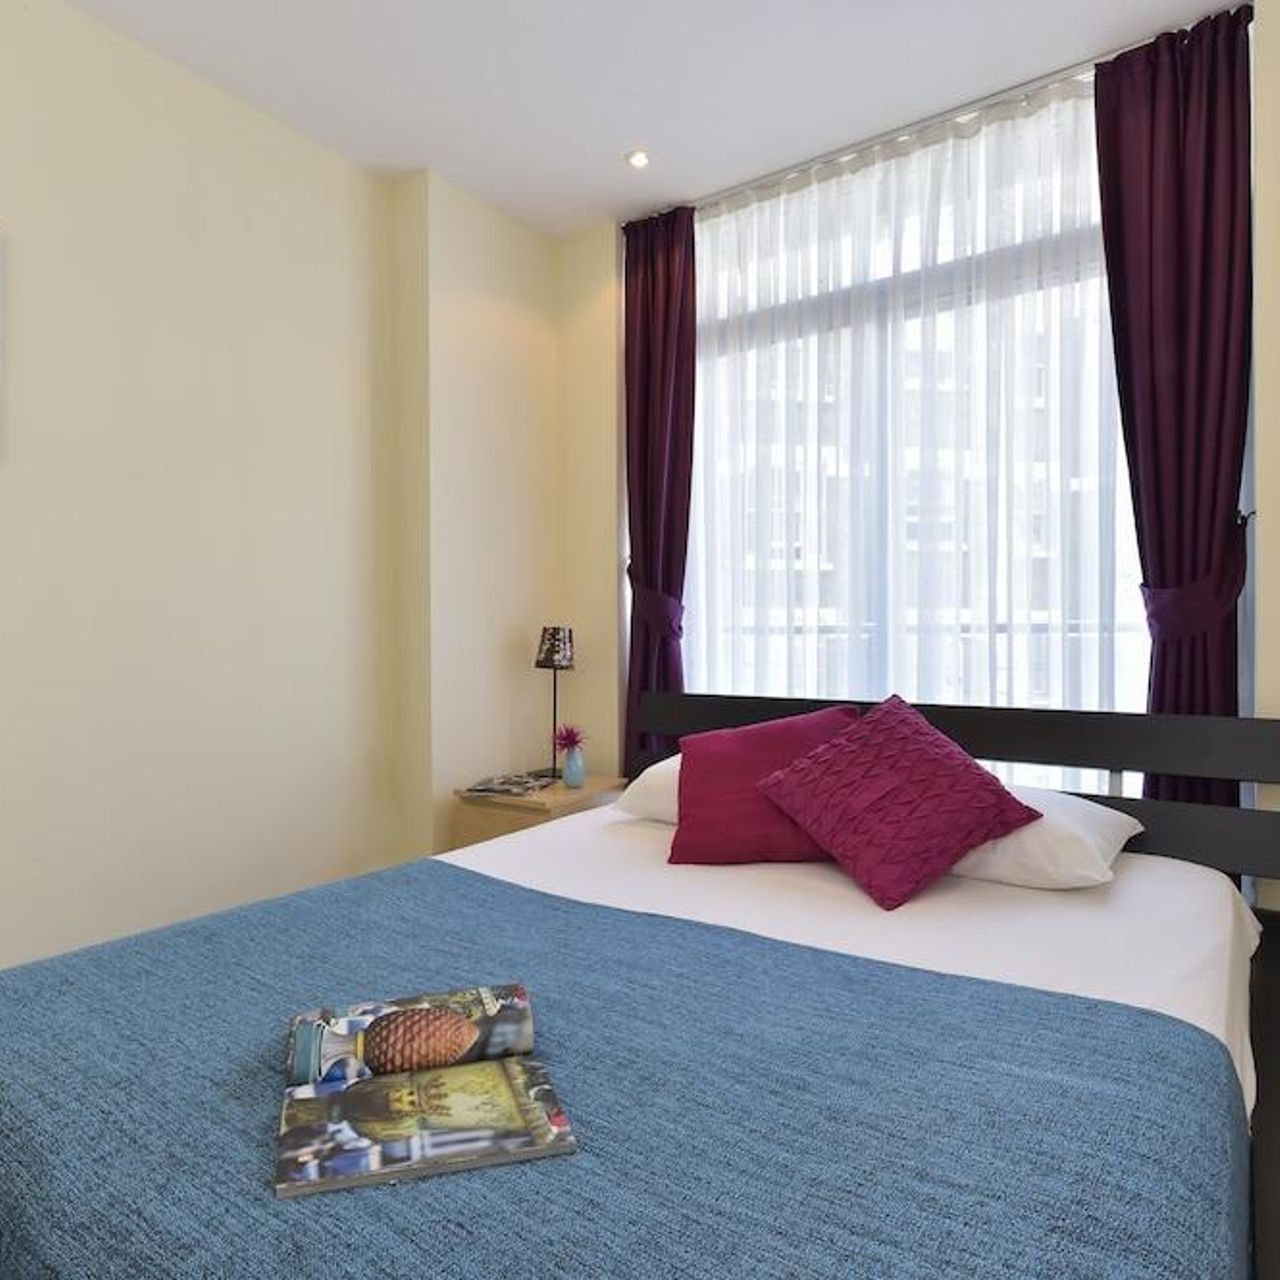 Hotel Churchill Níké Apartments - England - Great prices at HOTEL INFO